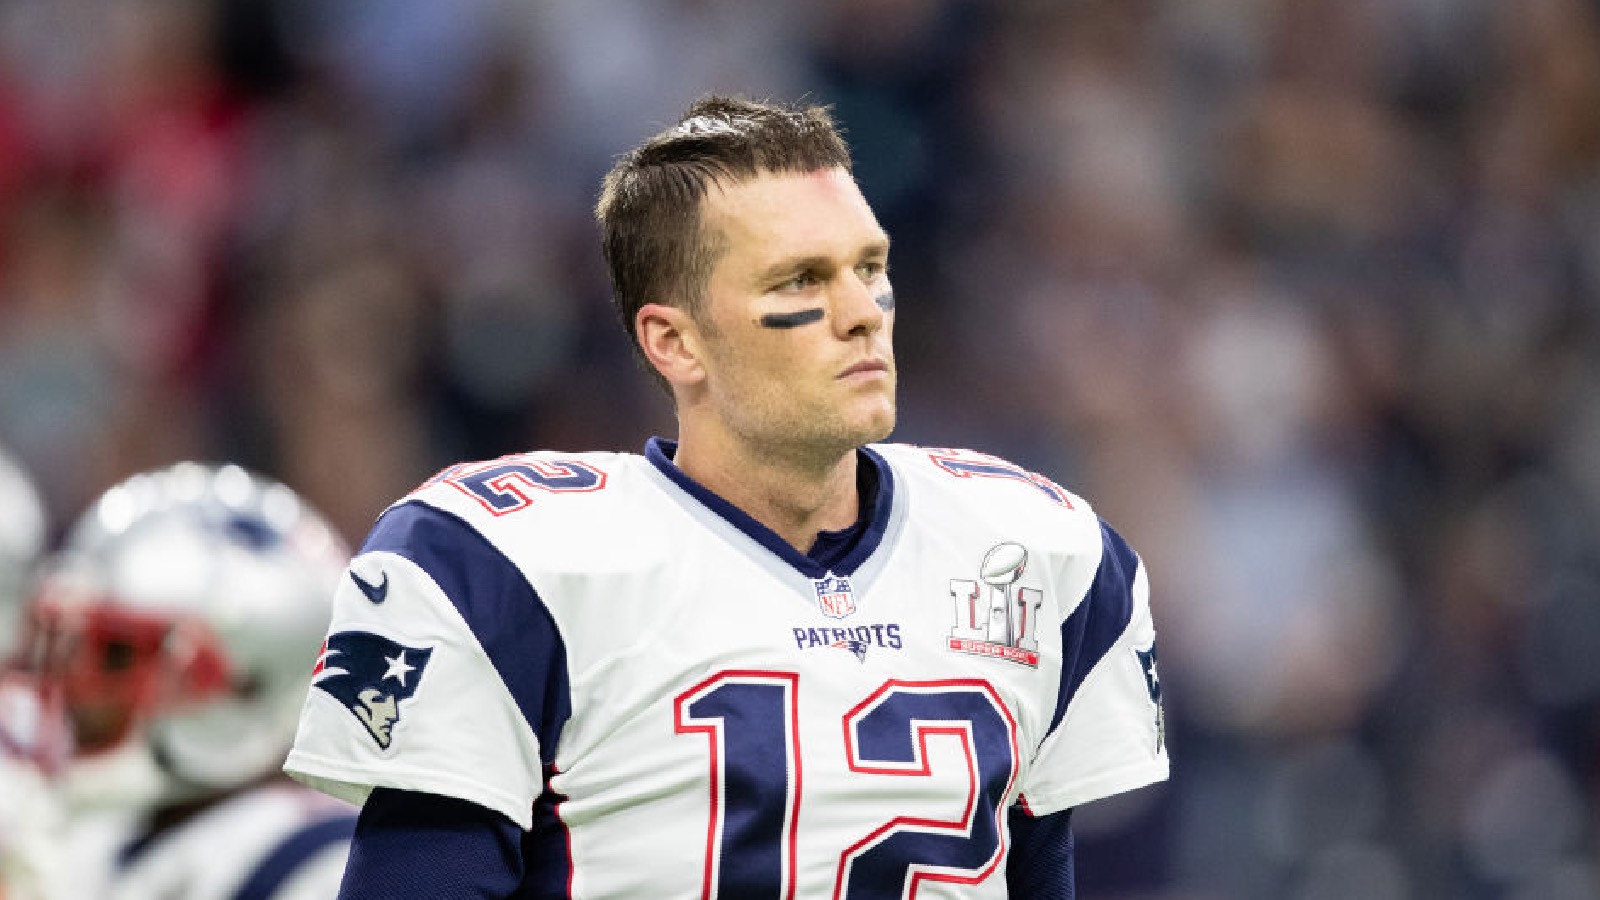 Tom Brady's Super Bowl Jersey Was Stolen